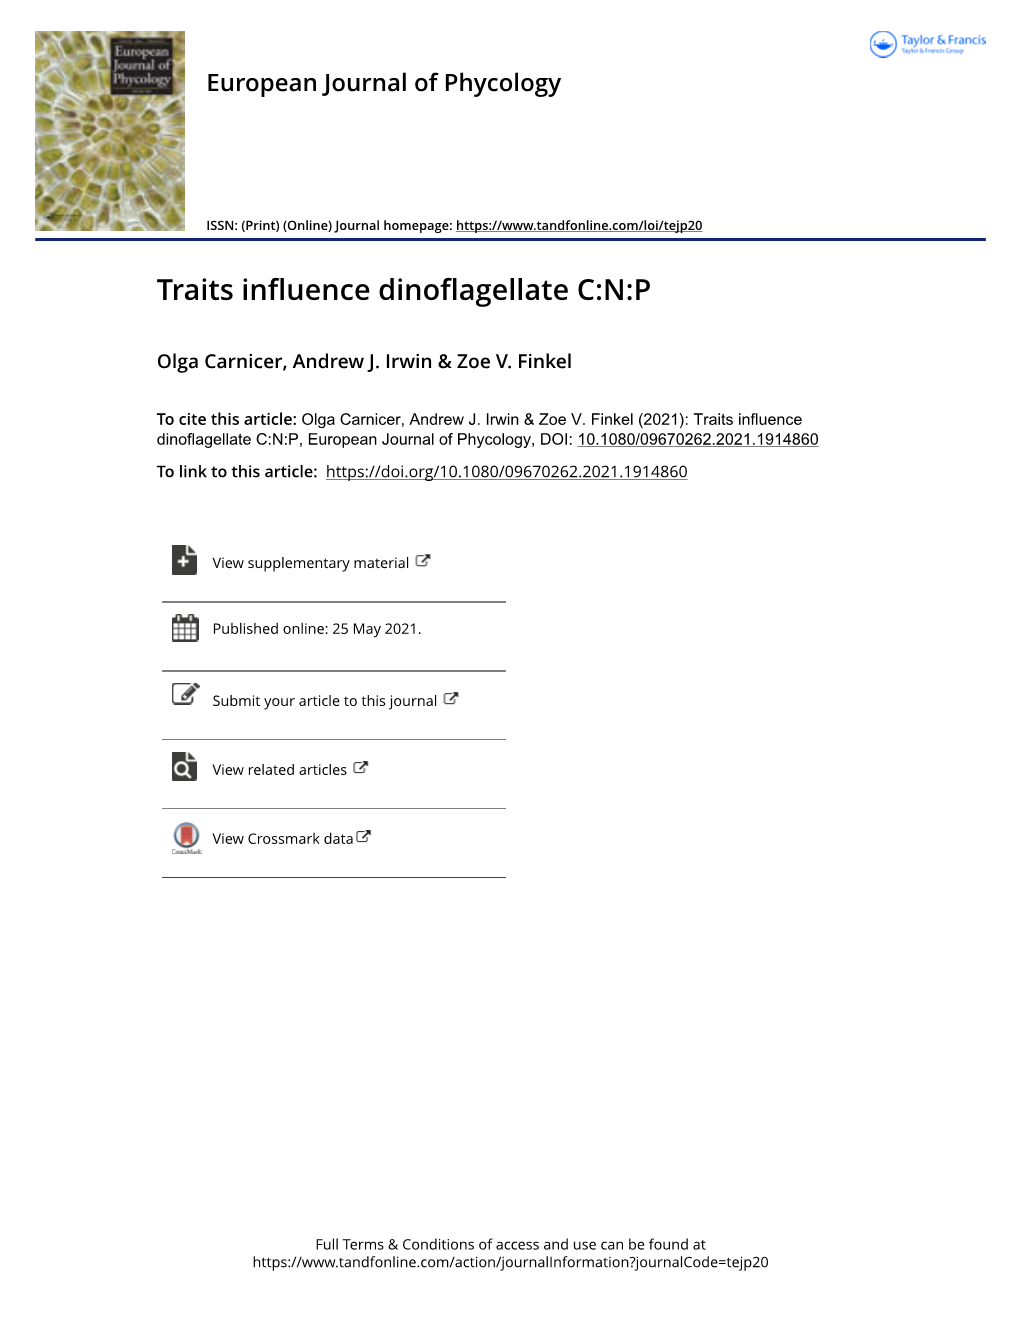 Traits Influence Dinoflagellate C:N:P